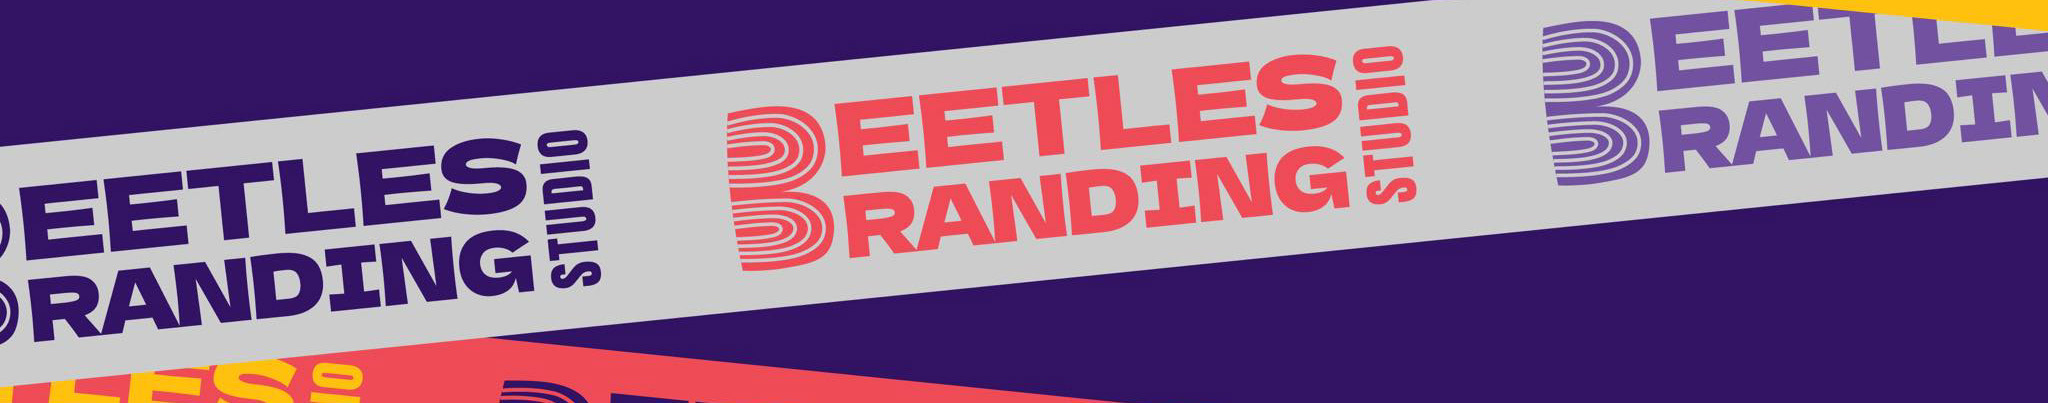 Profil-Banner von Beetles Branding Studio